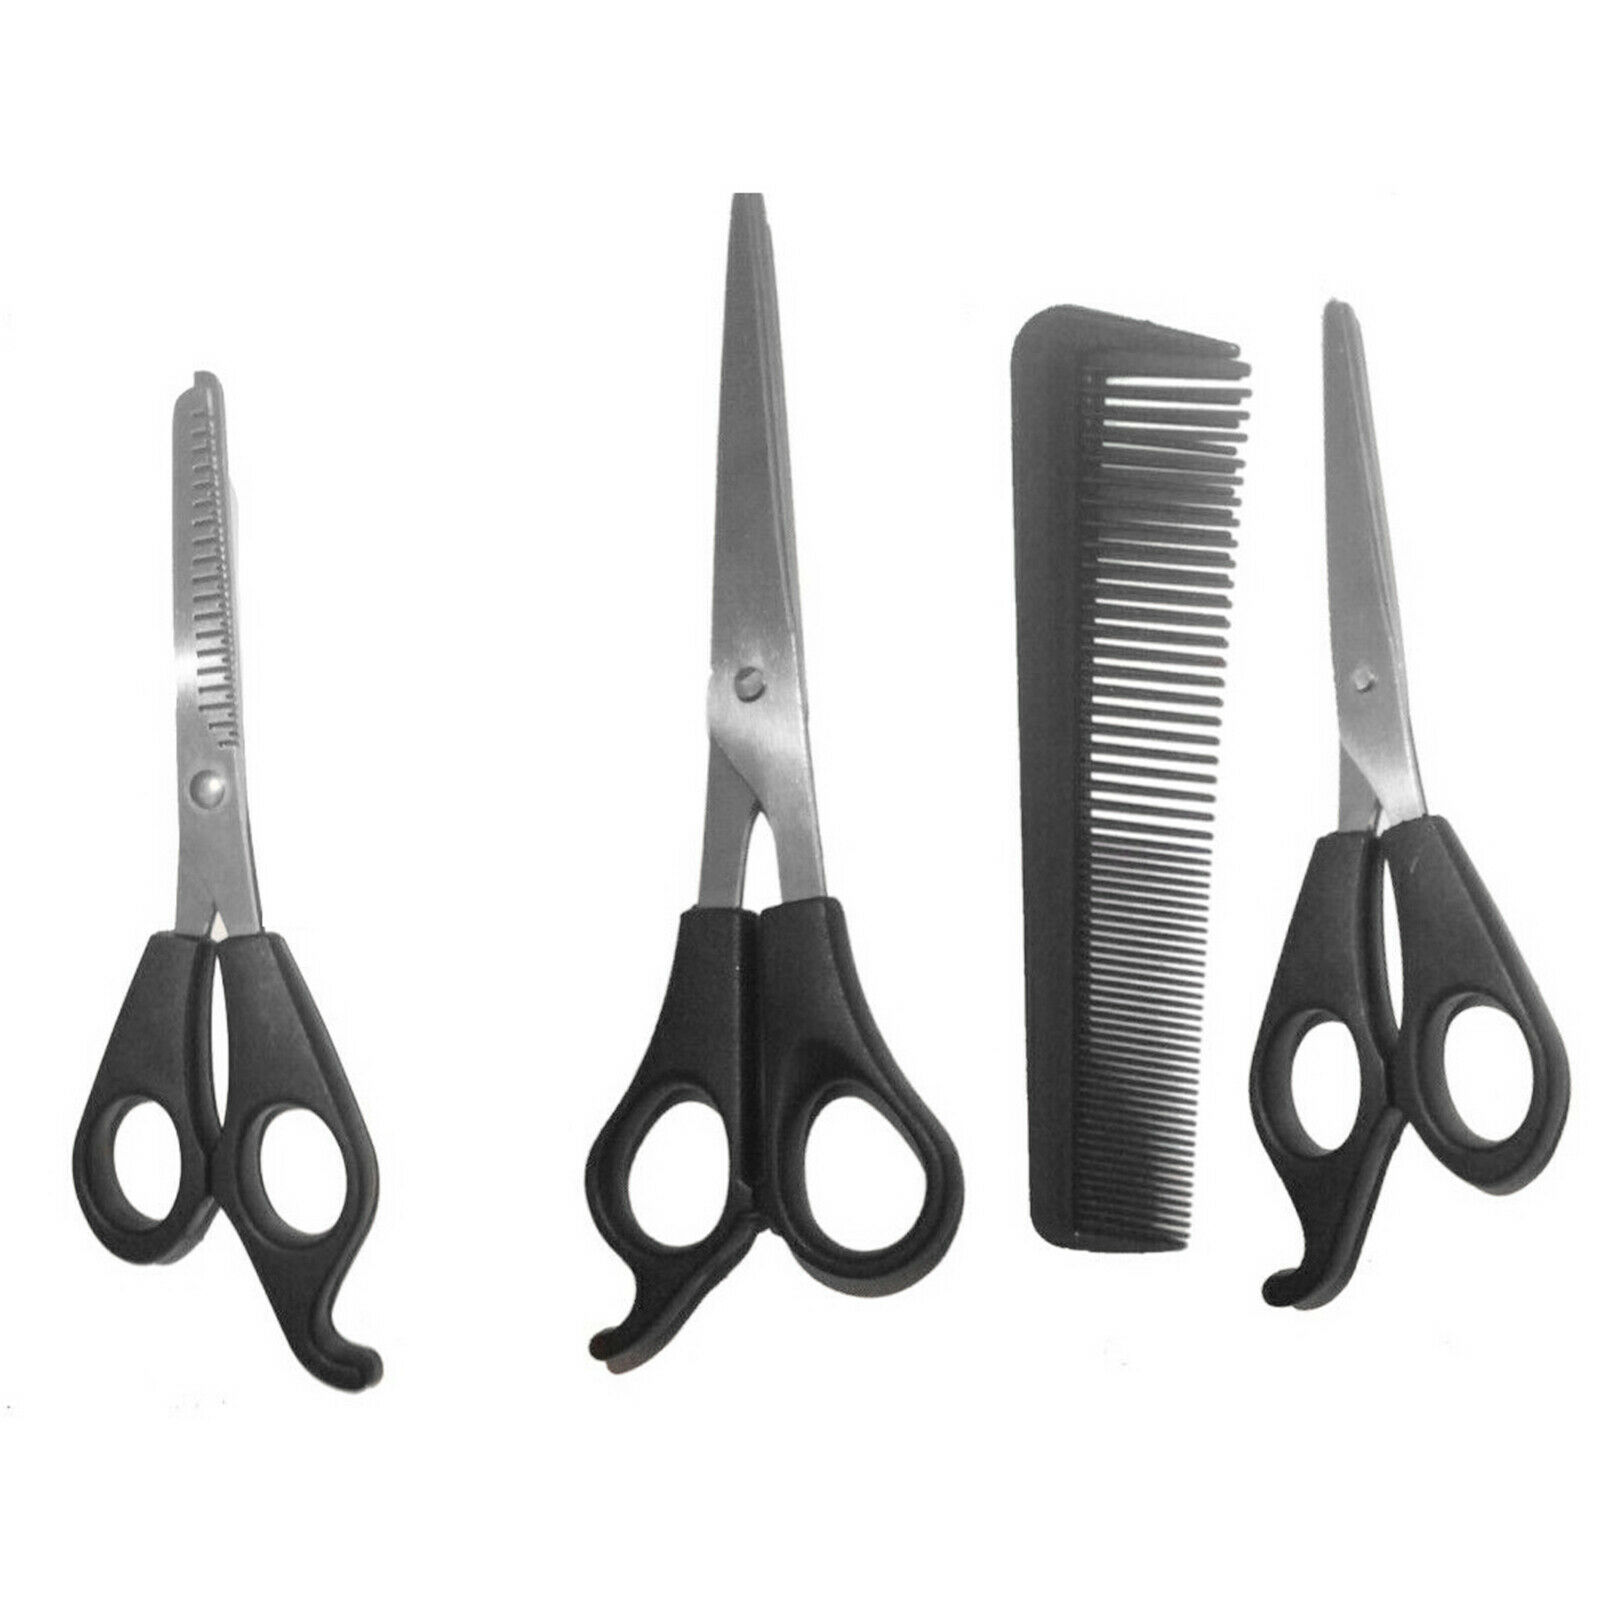 4Pcs Set Salon Hairdressing Scissors Professional Thinning Cutting Barber Shears Salon Comb Set